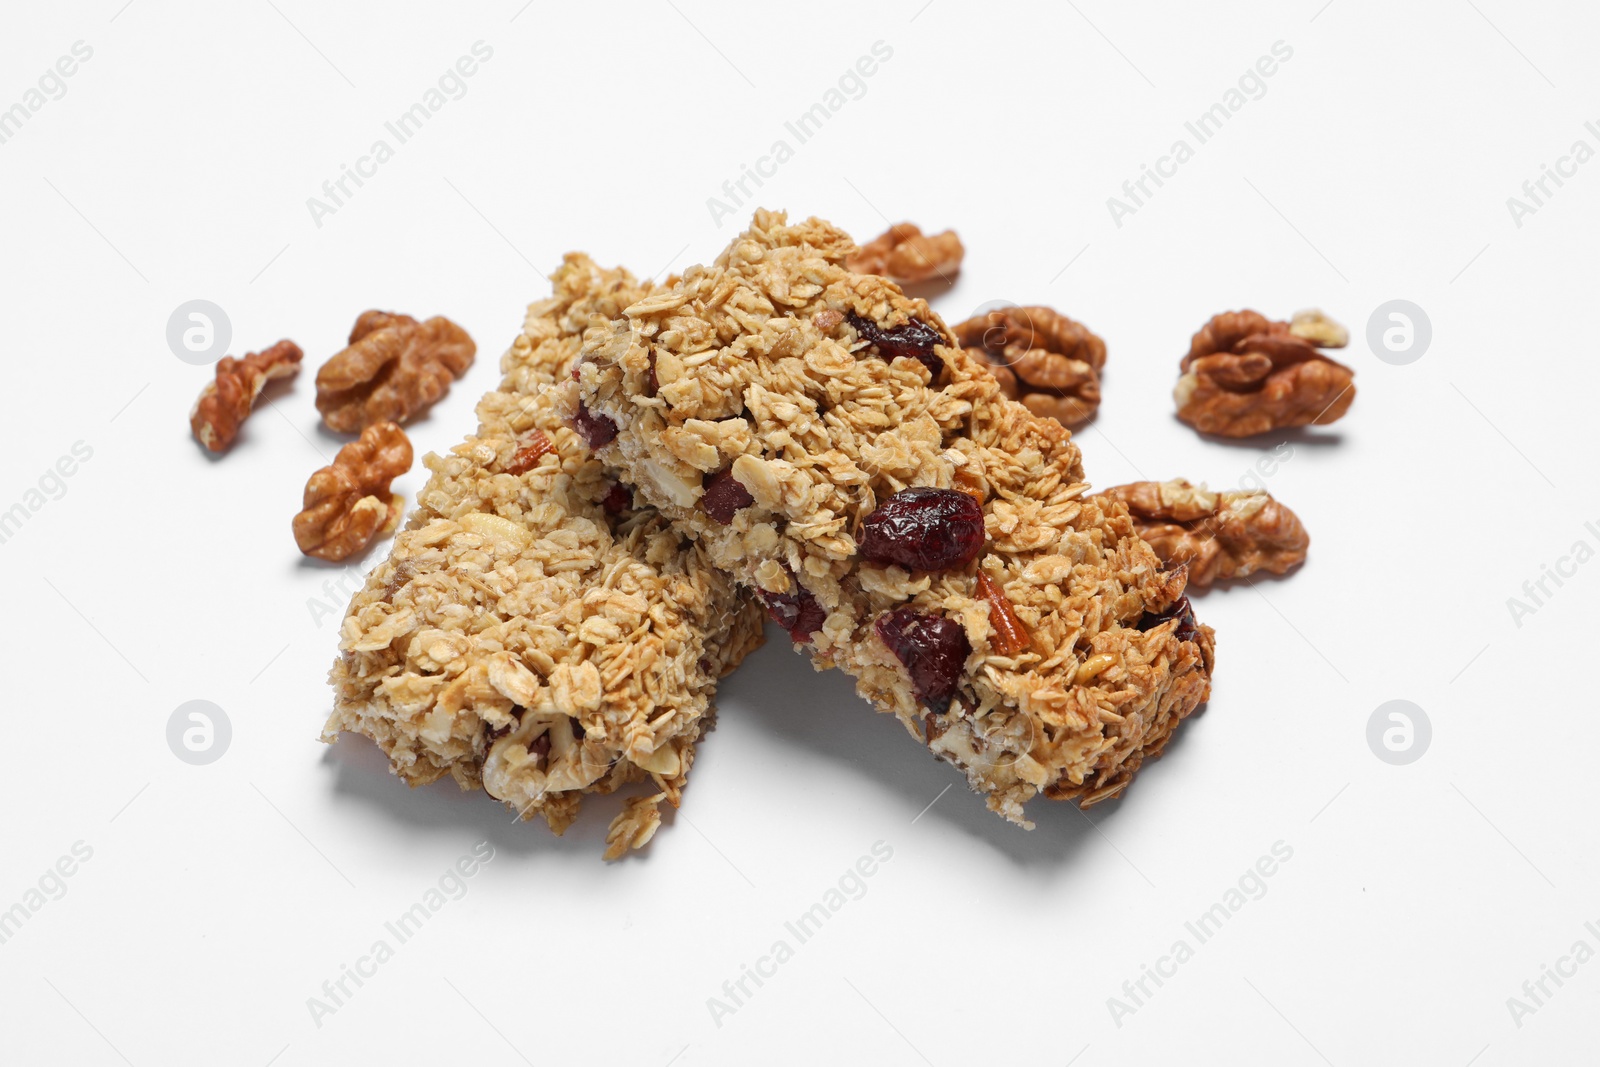 Photo of Tasty granola bars and walnuts on white background